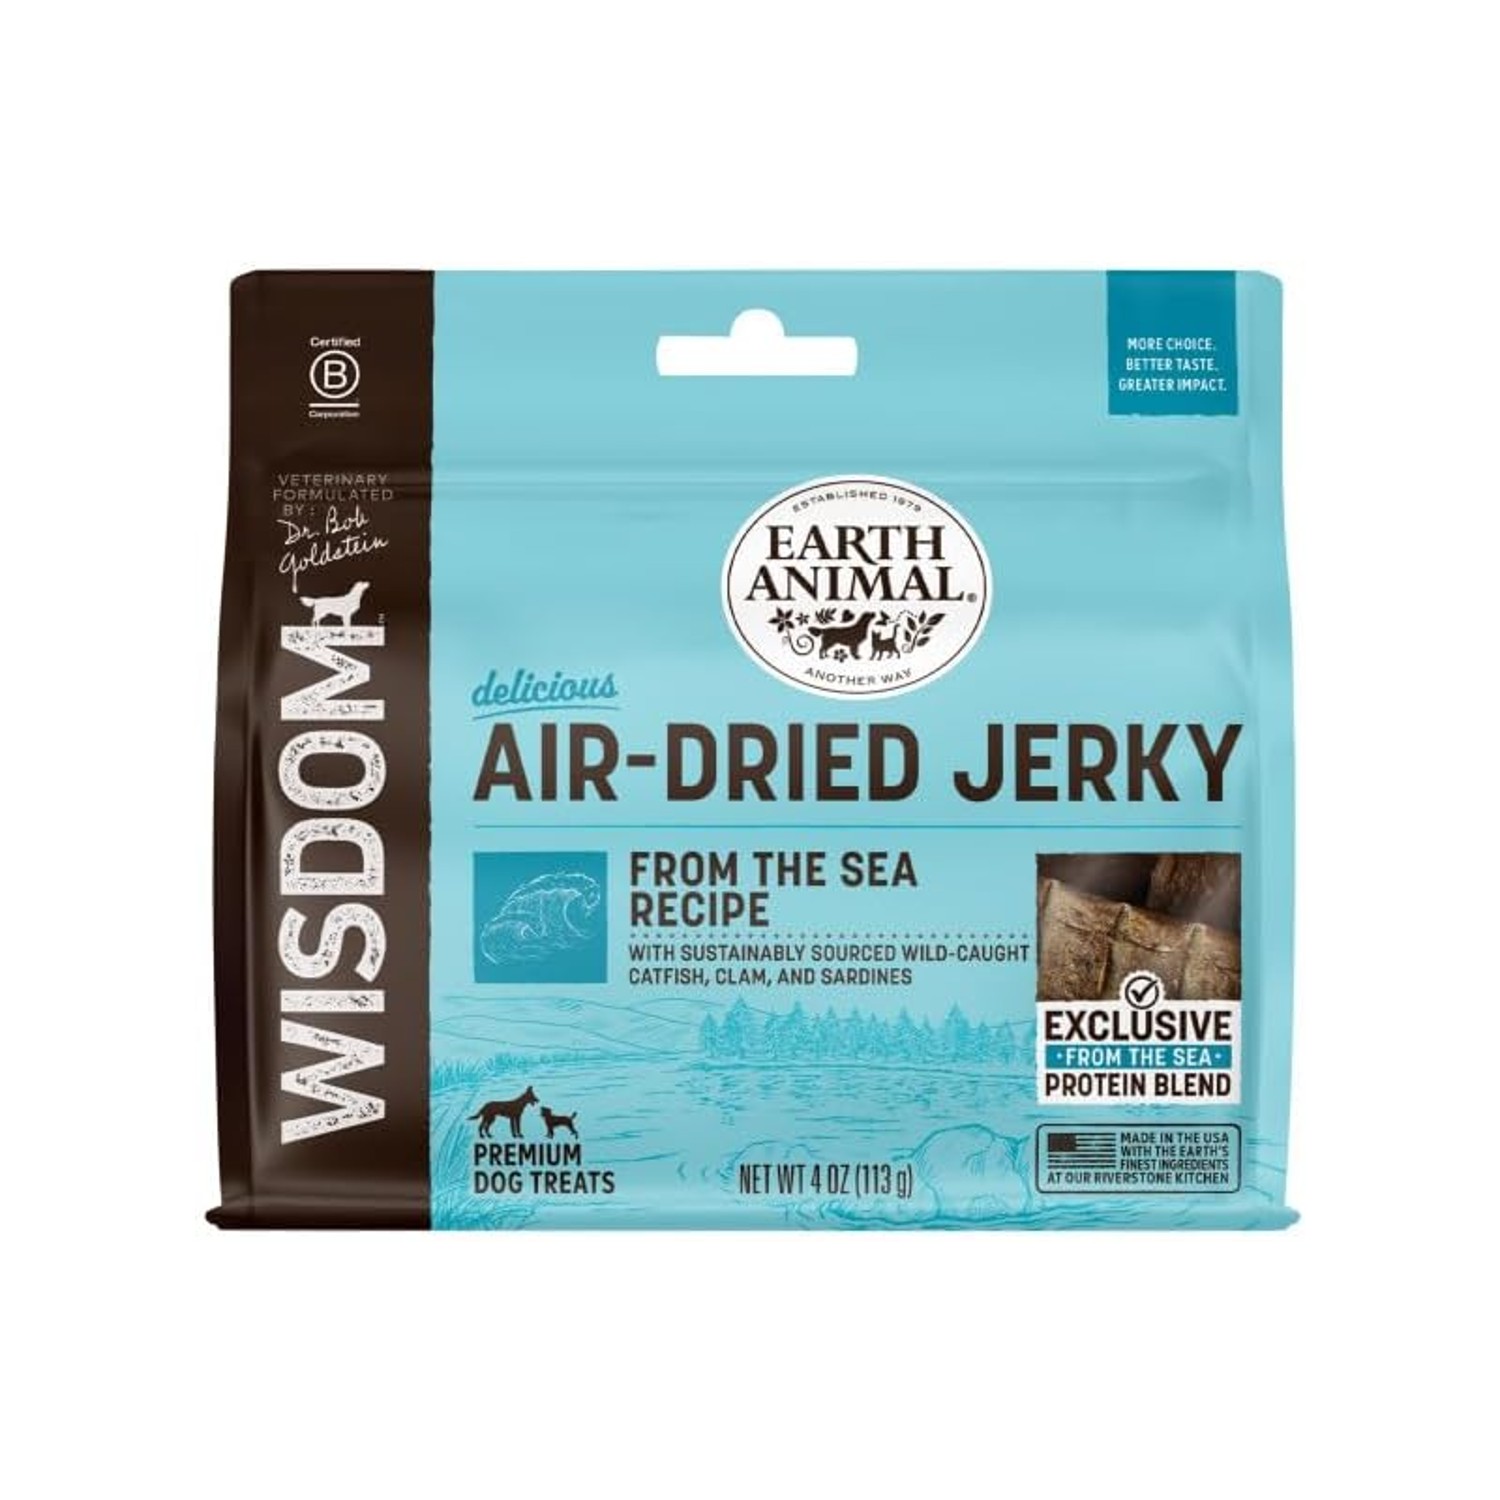 Earth Animal Wisdom Air-Dried Jerky Dog Treat - From the Sea